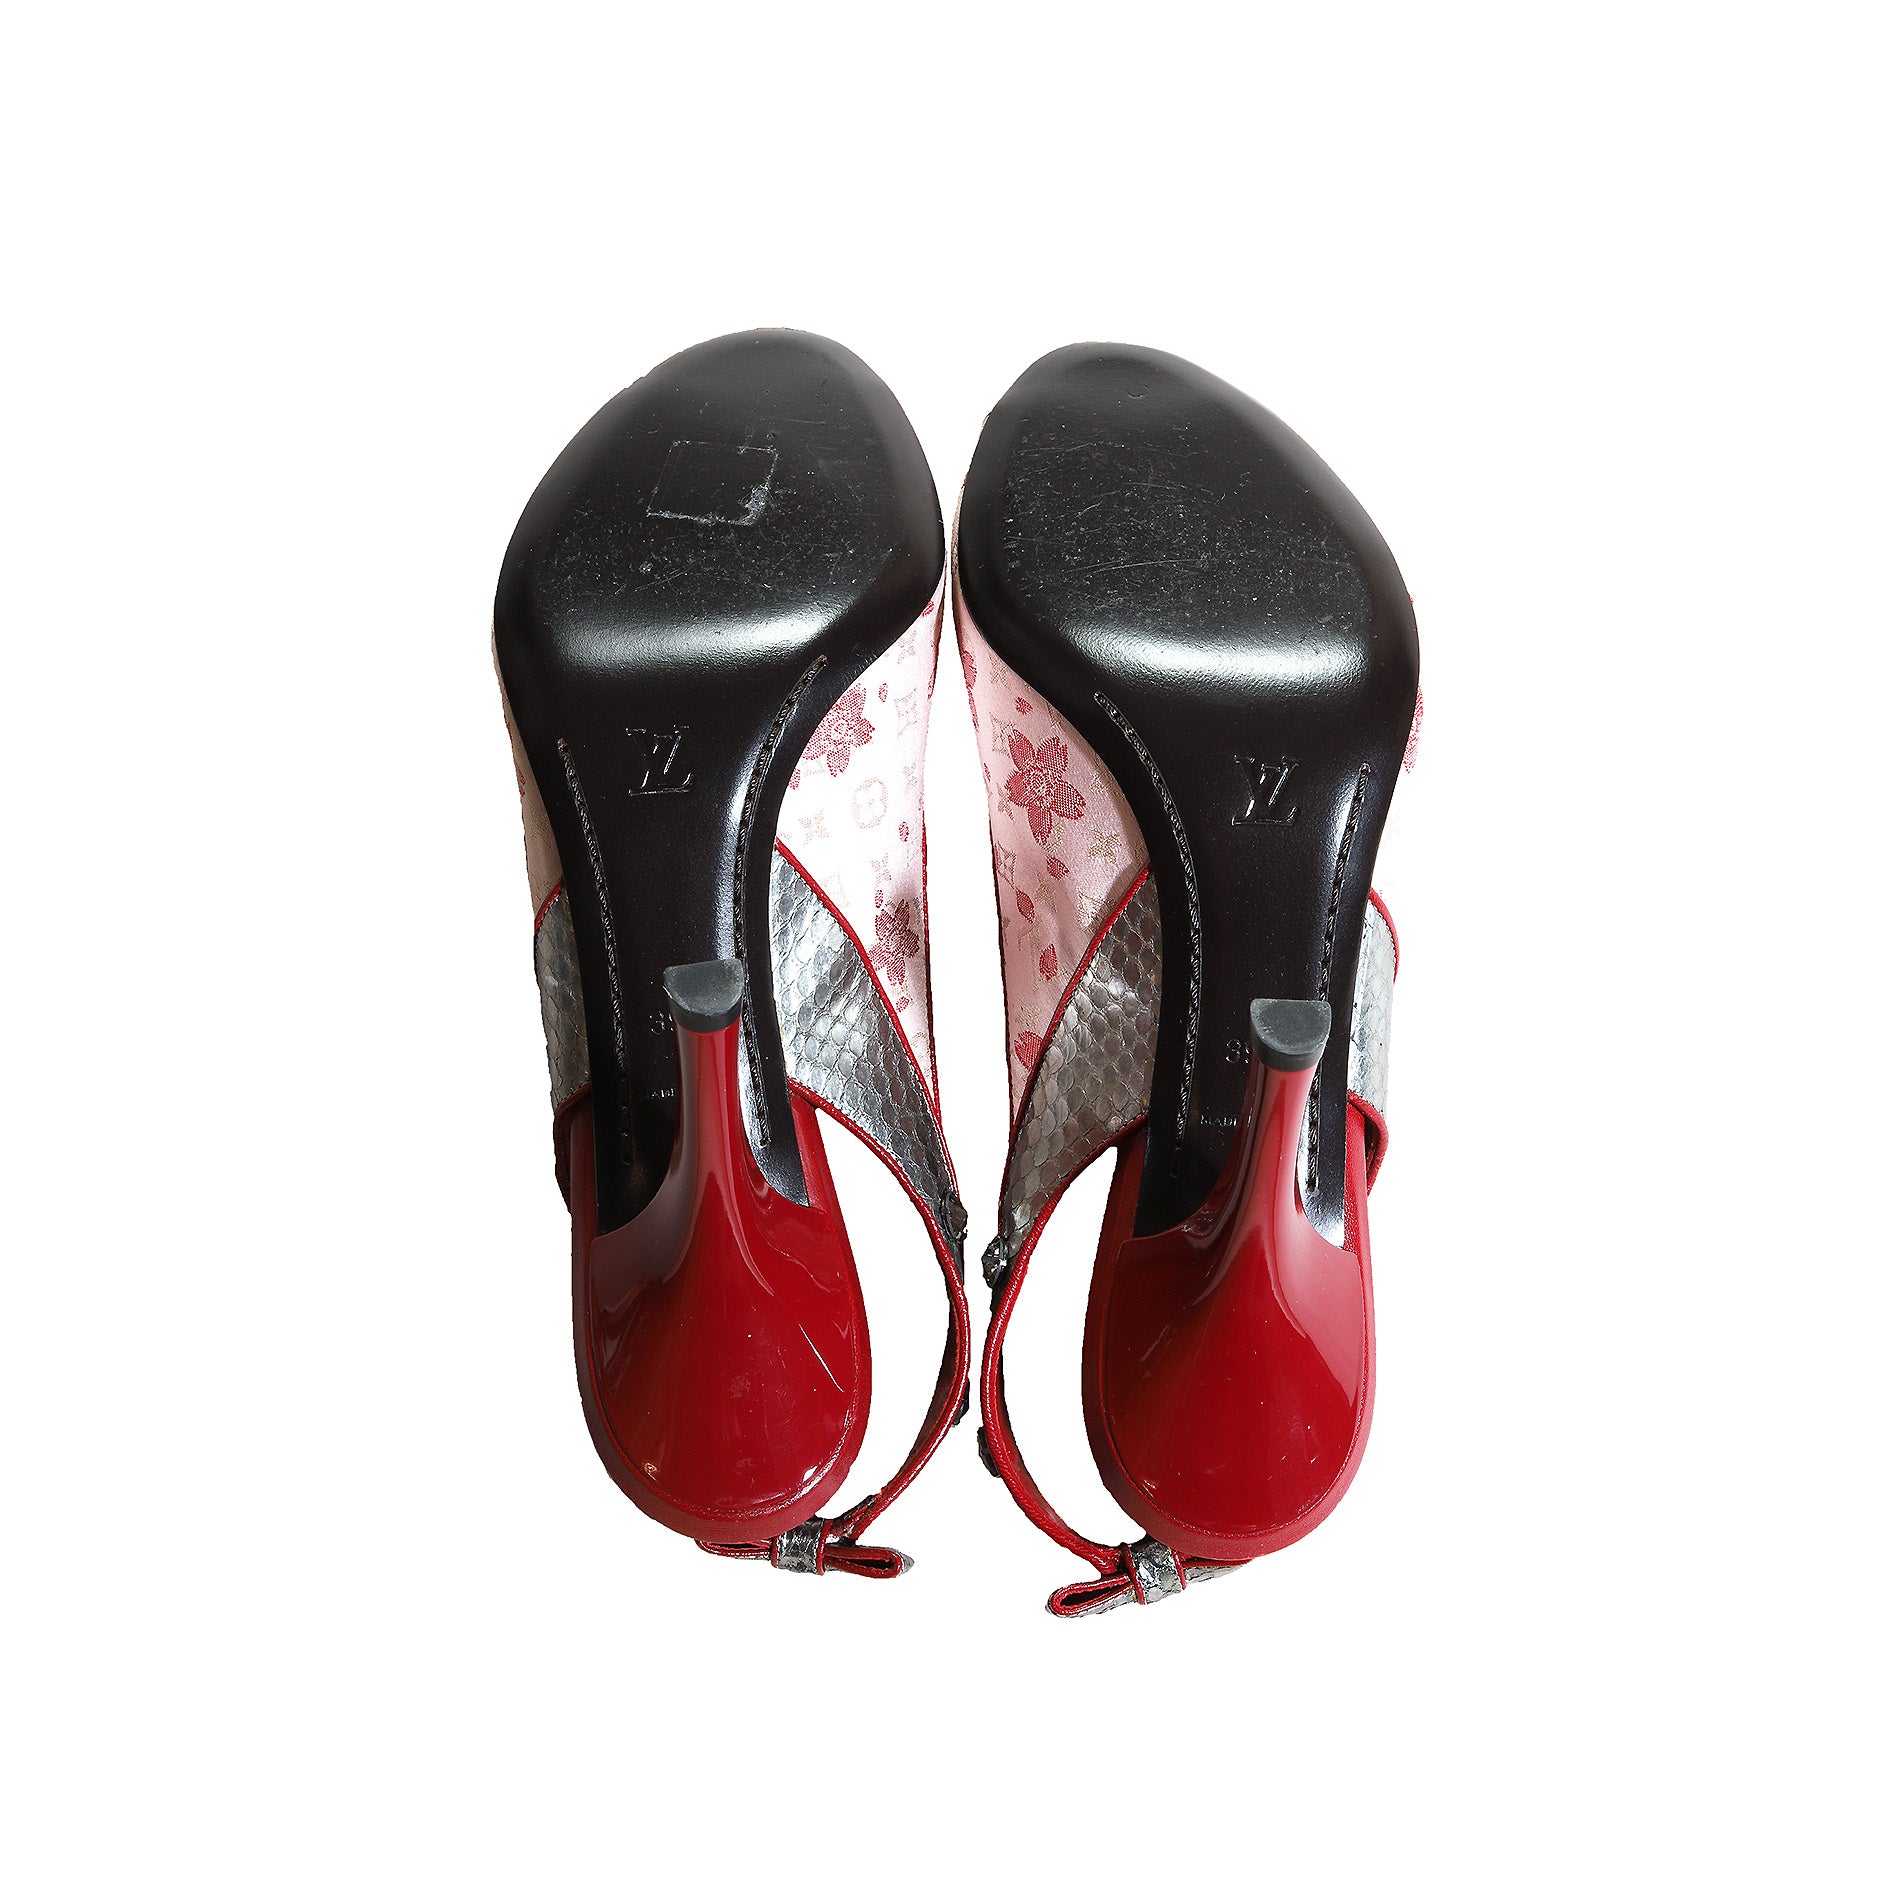 Louis Vuitton Cherry Pumps in Kitten Heels Size 39, Women's